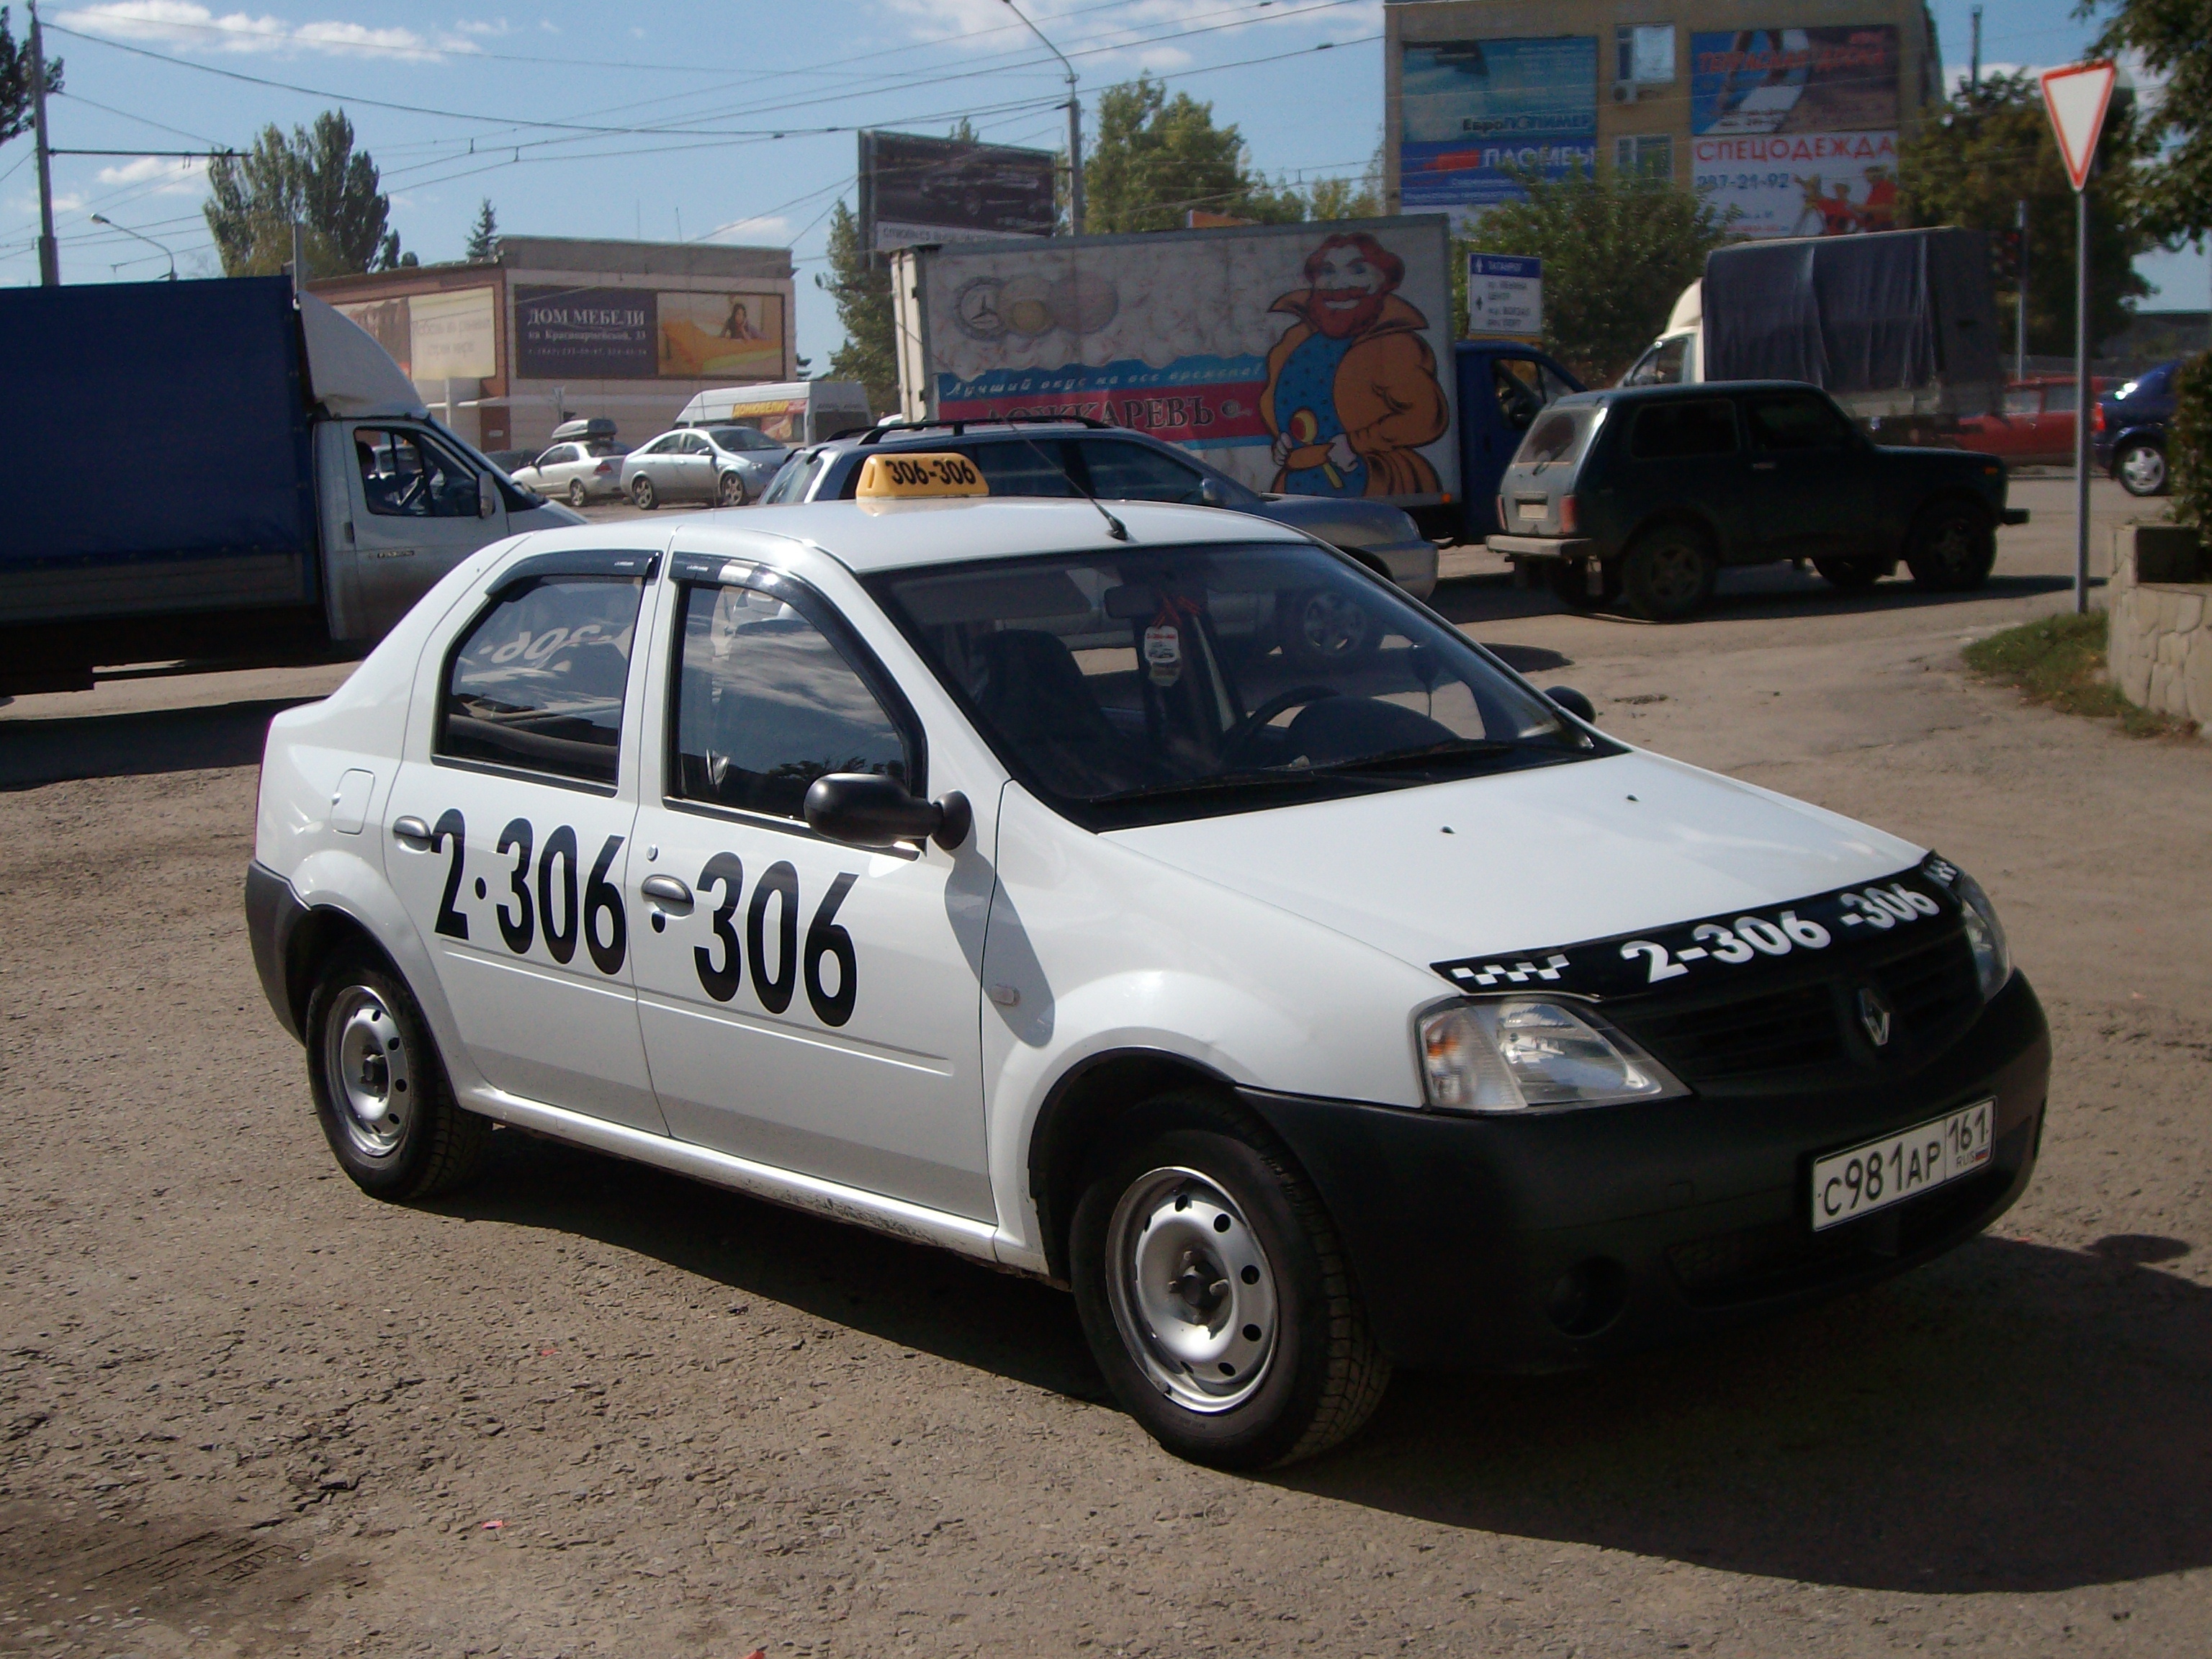 Номер телефона такси в ростове на дону. Рено Логан такси 306 306. Белое такси. Такси Ростов-на-Дону.